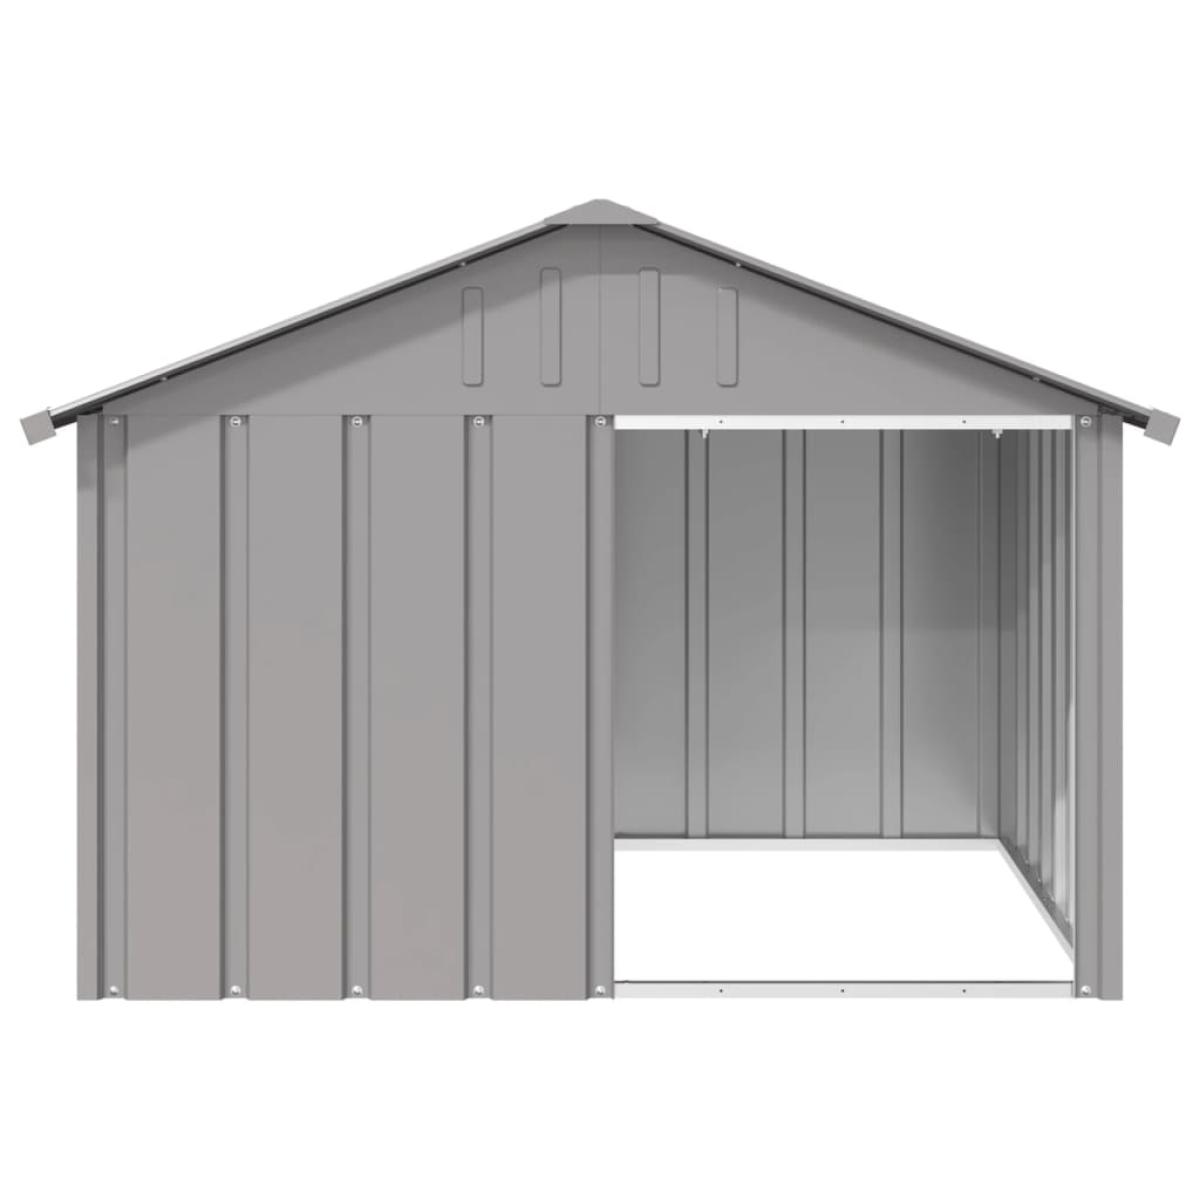 Casa para perros acero galvanizado gris 116,5x153x81,5 cm